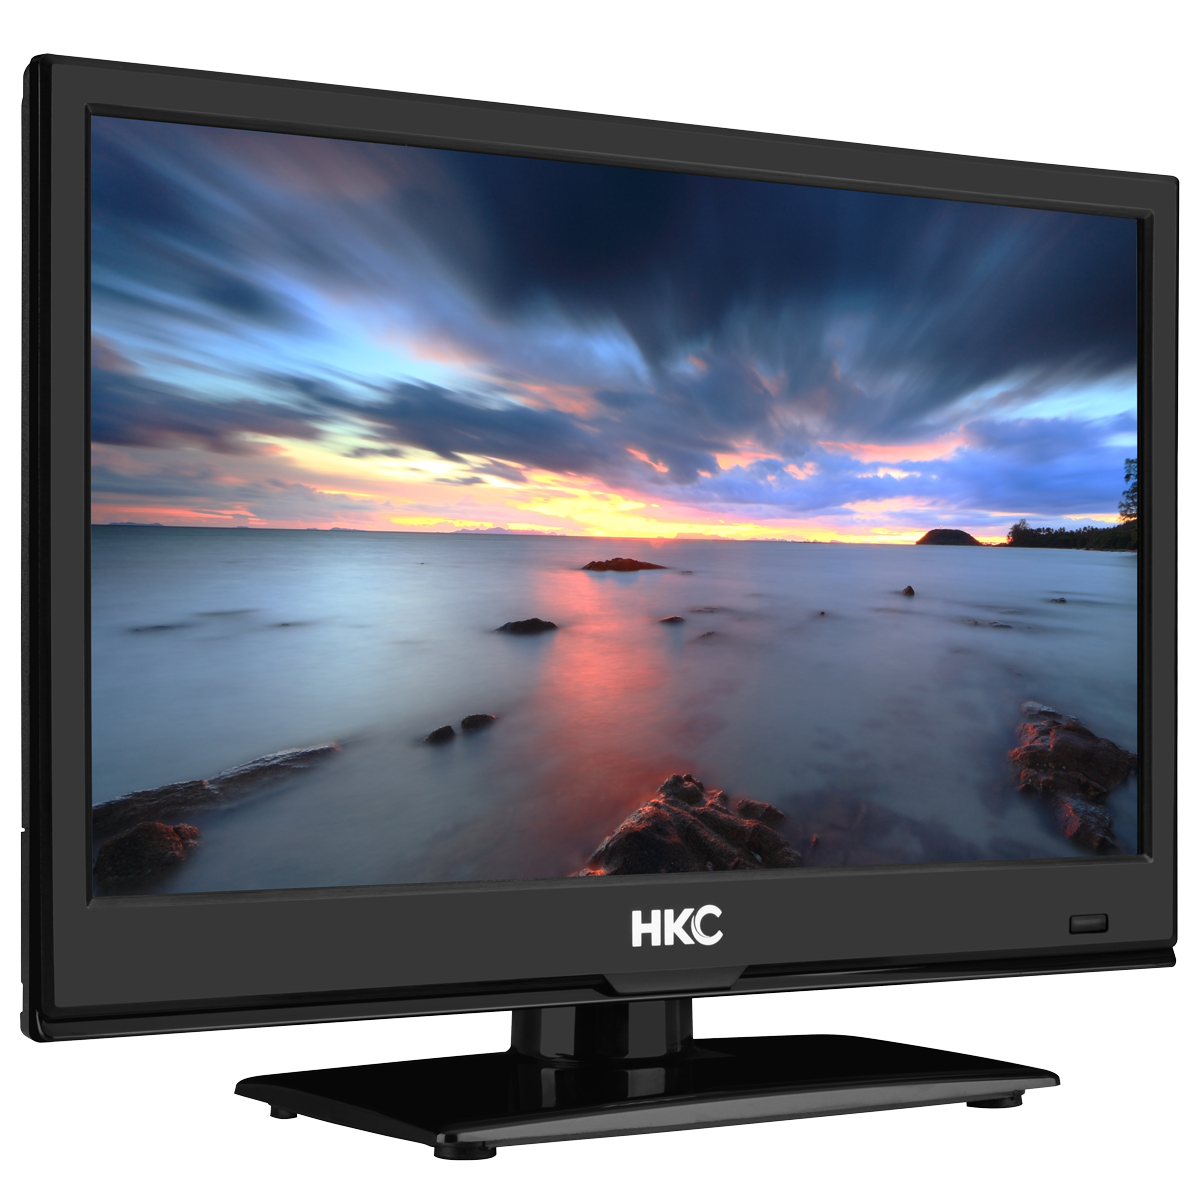 HKC 16M4 16 inch HD-ready LED tv